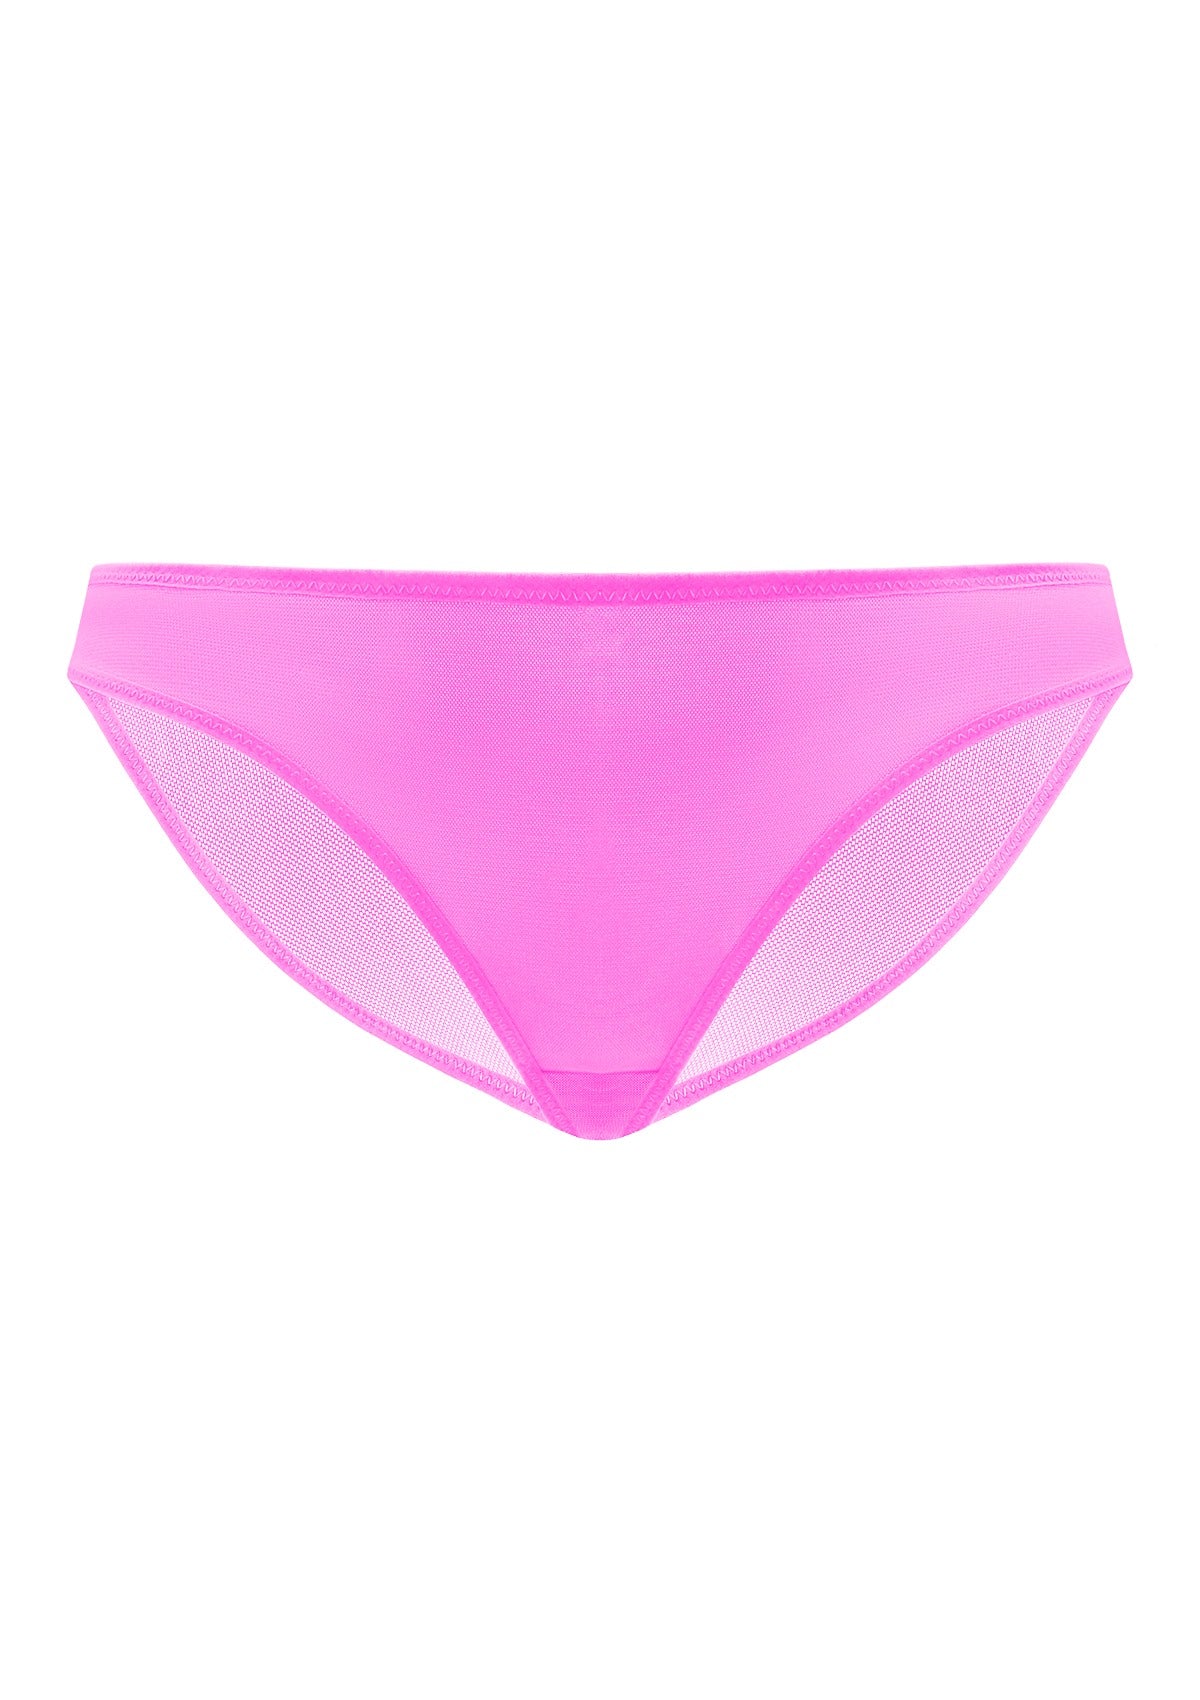 HSIA Billie Low Rise Breathable Soft Sheer Mesh Bikini Underwear - XXXL / Barbie Pink